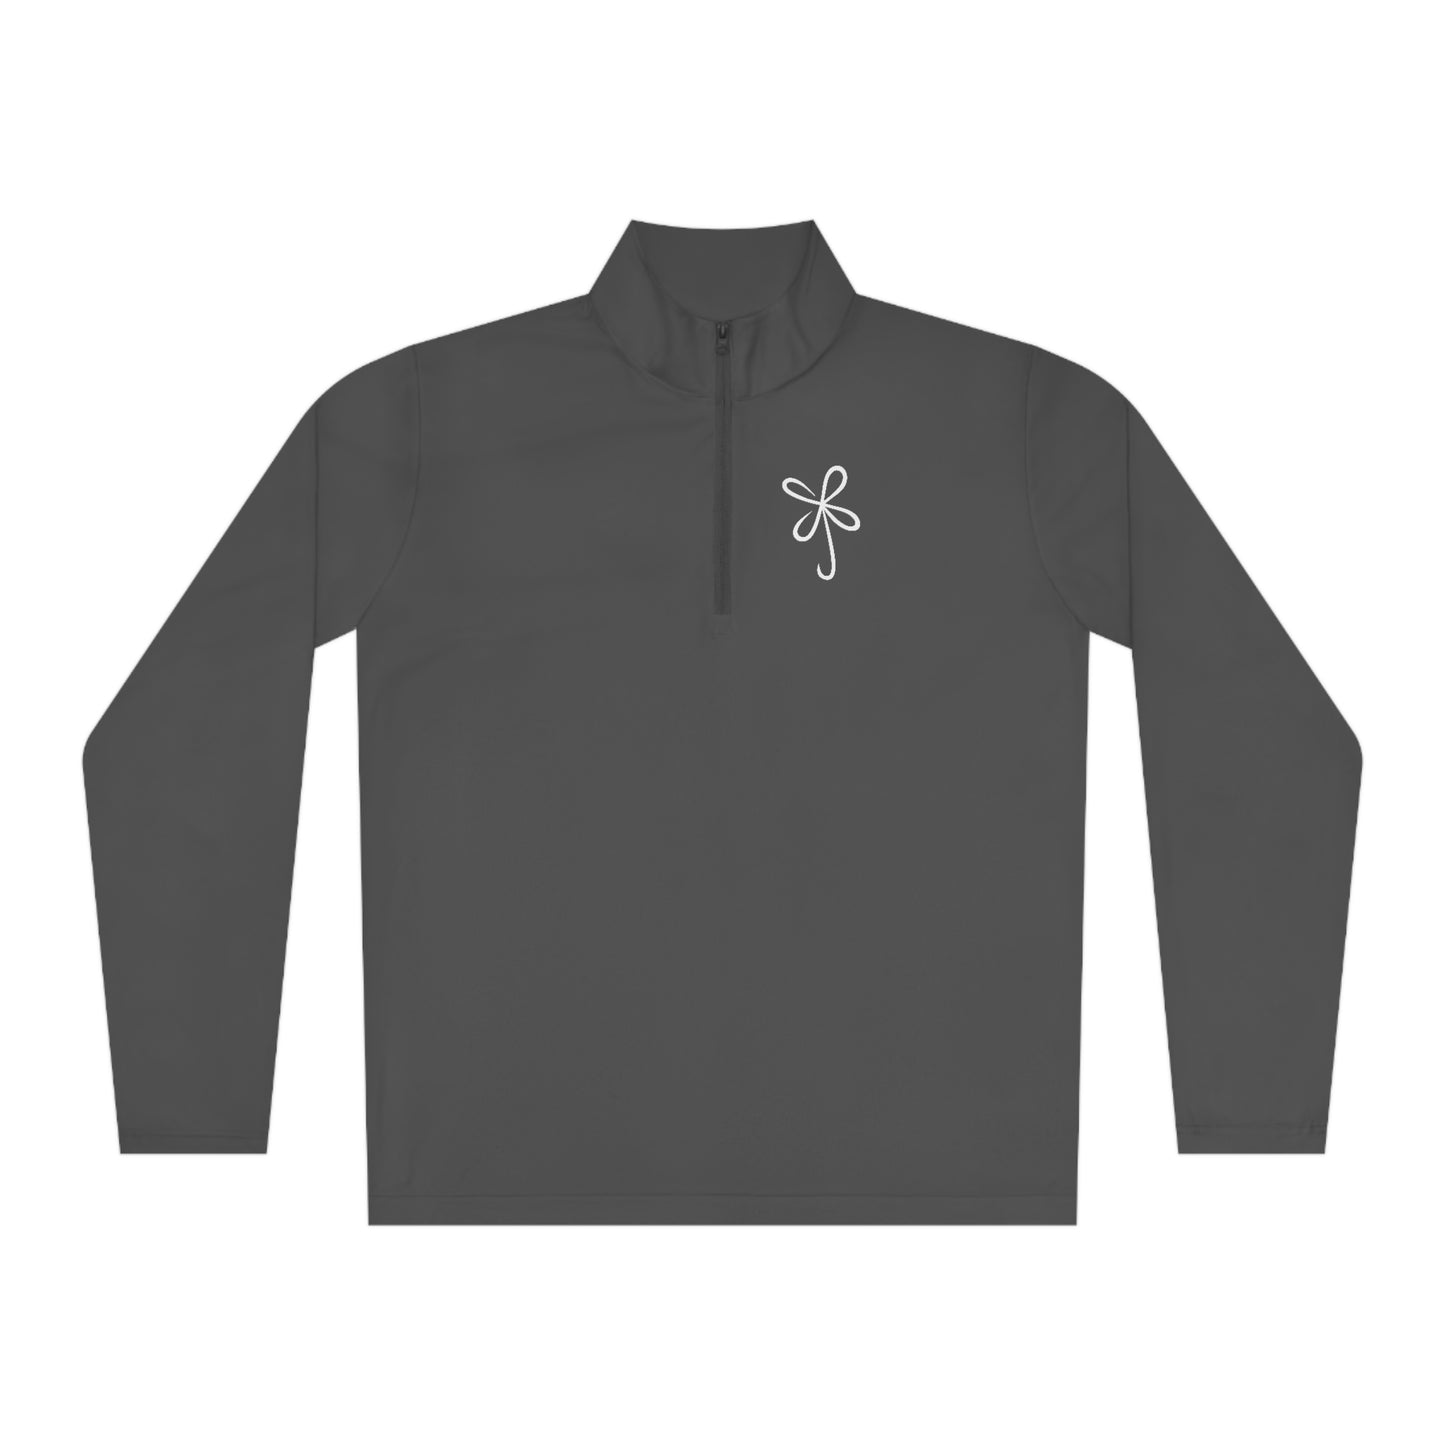 CLVR Unisex Quarter-Zip Pullover with White Logo